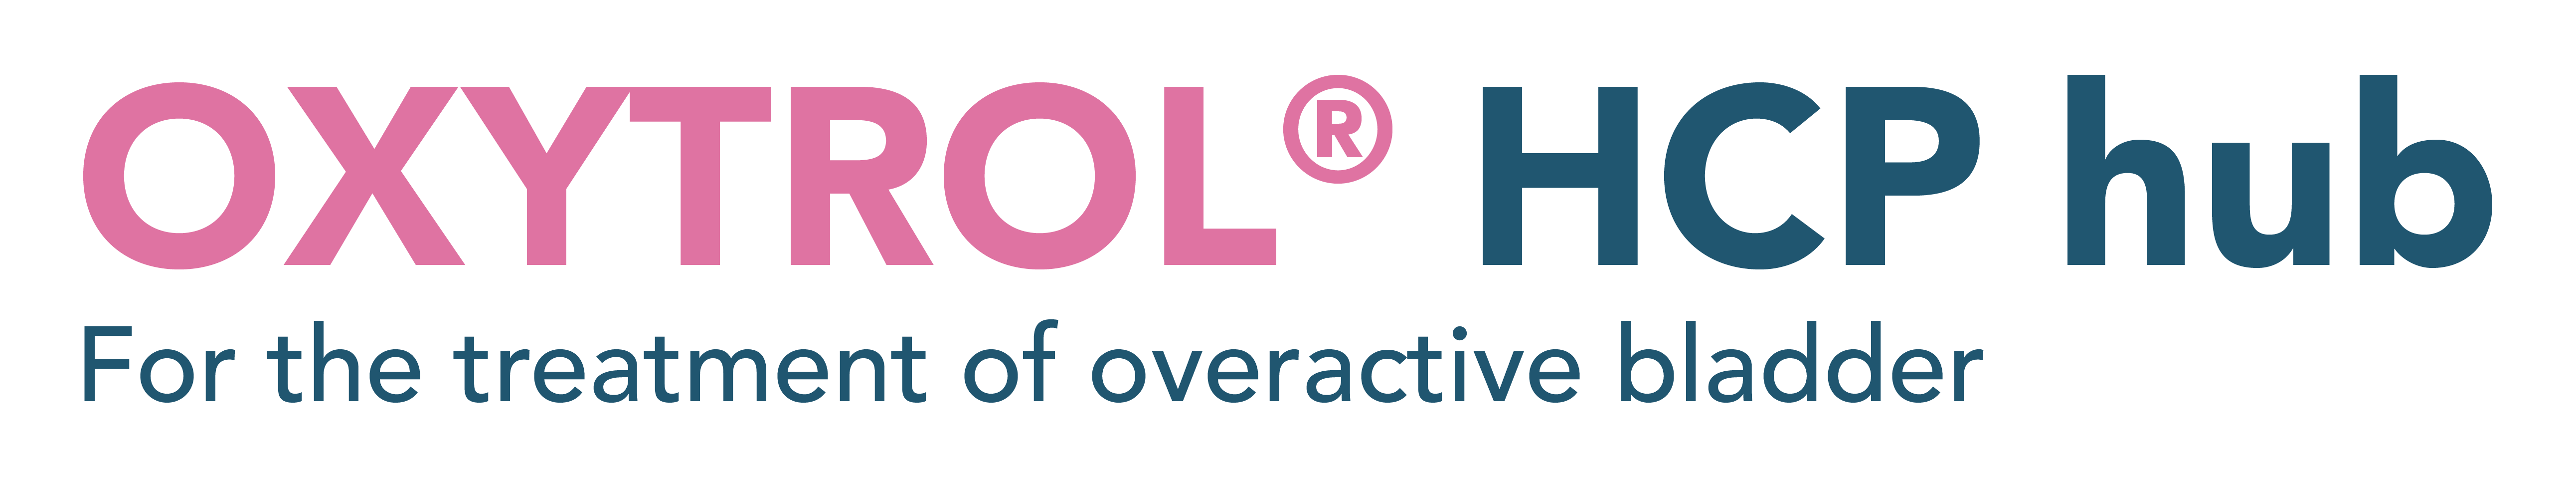 Oxytrol Hub banner